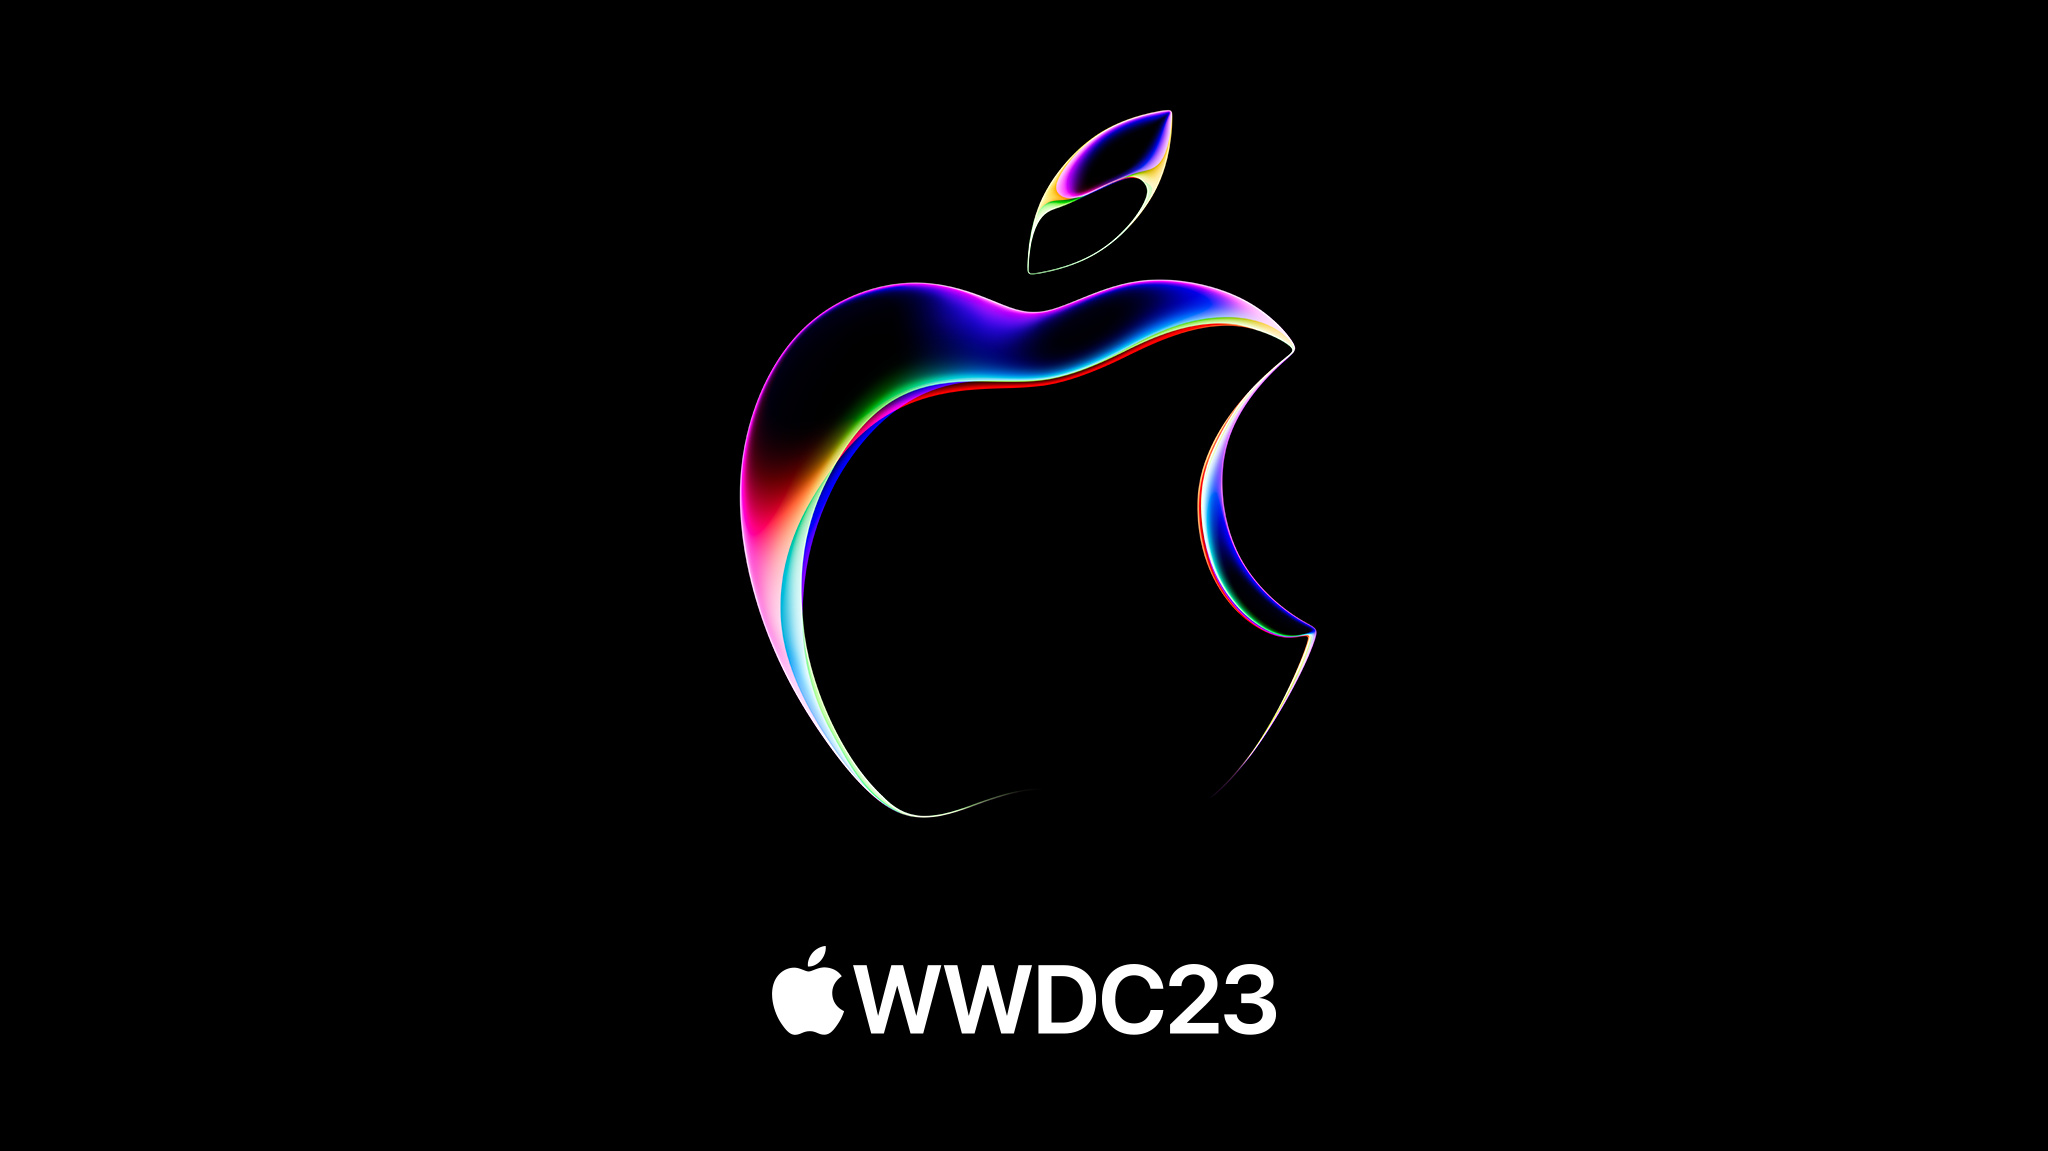 A colorful Apple logo